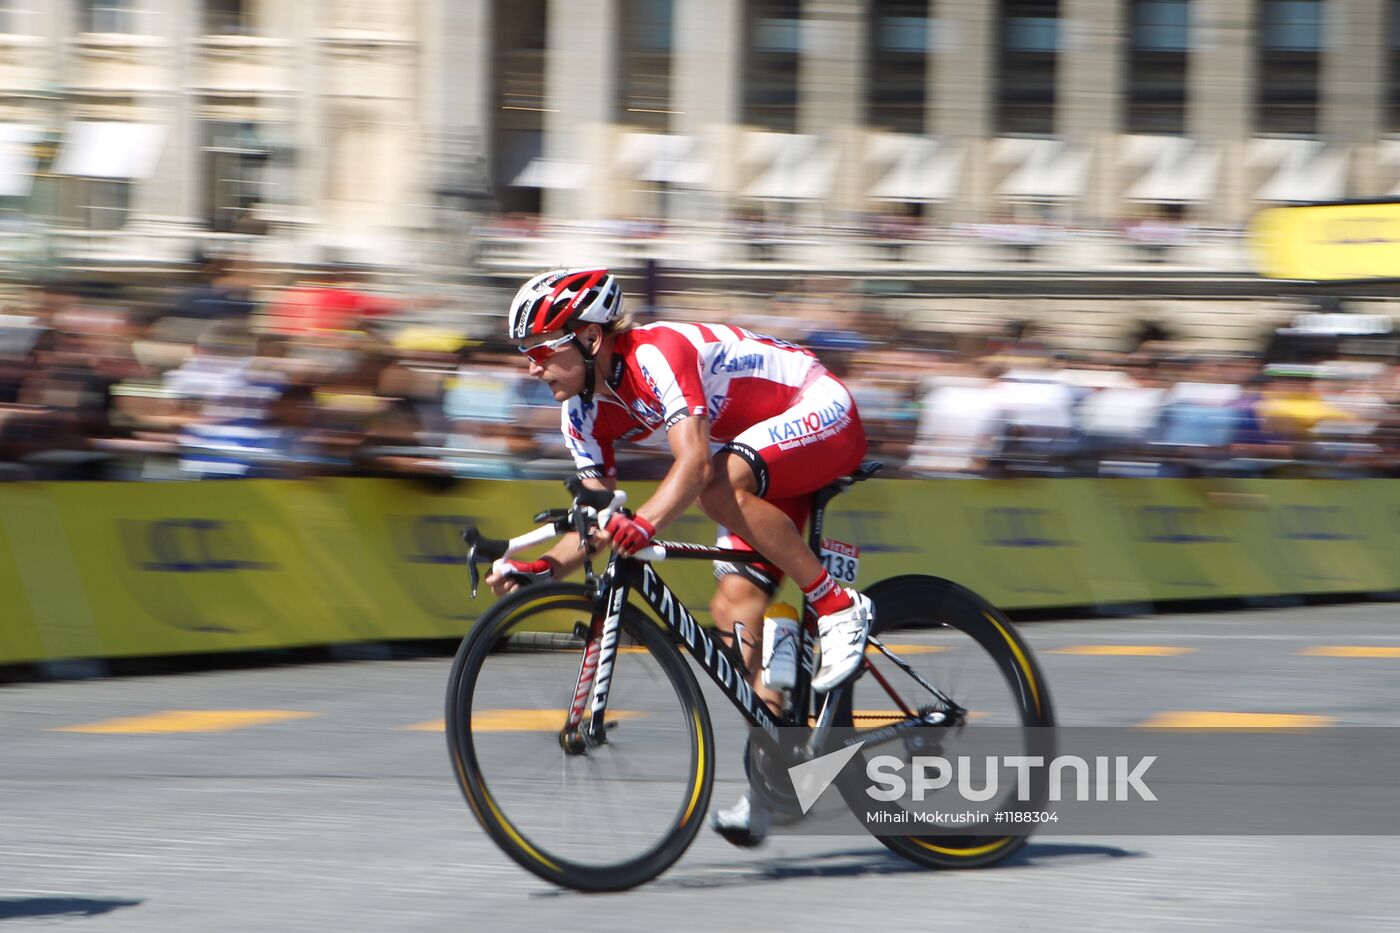 Cycling Tour de France 2012. Finish